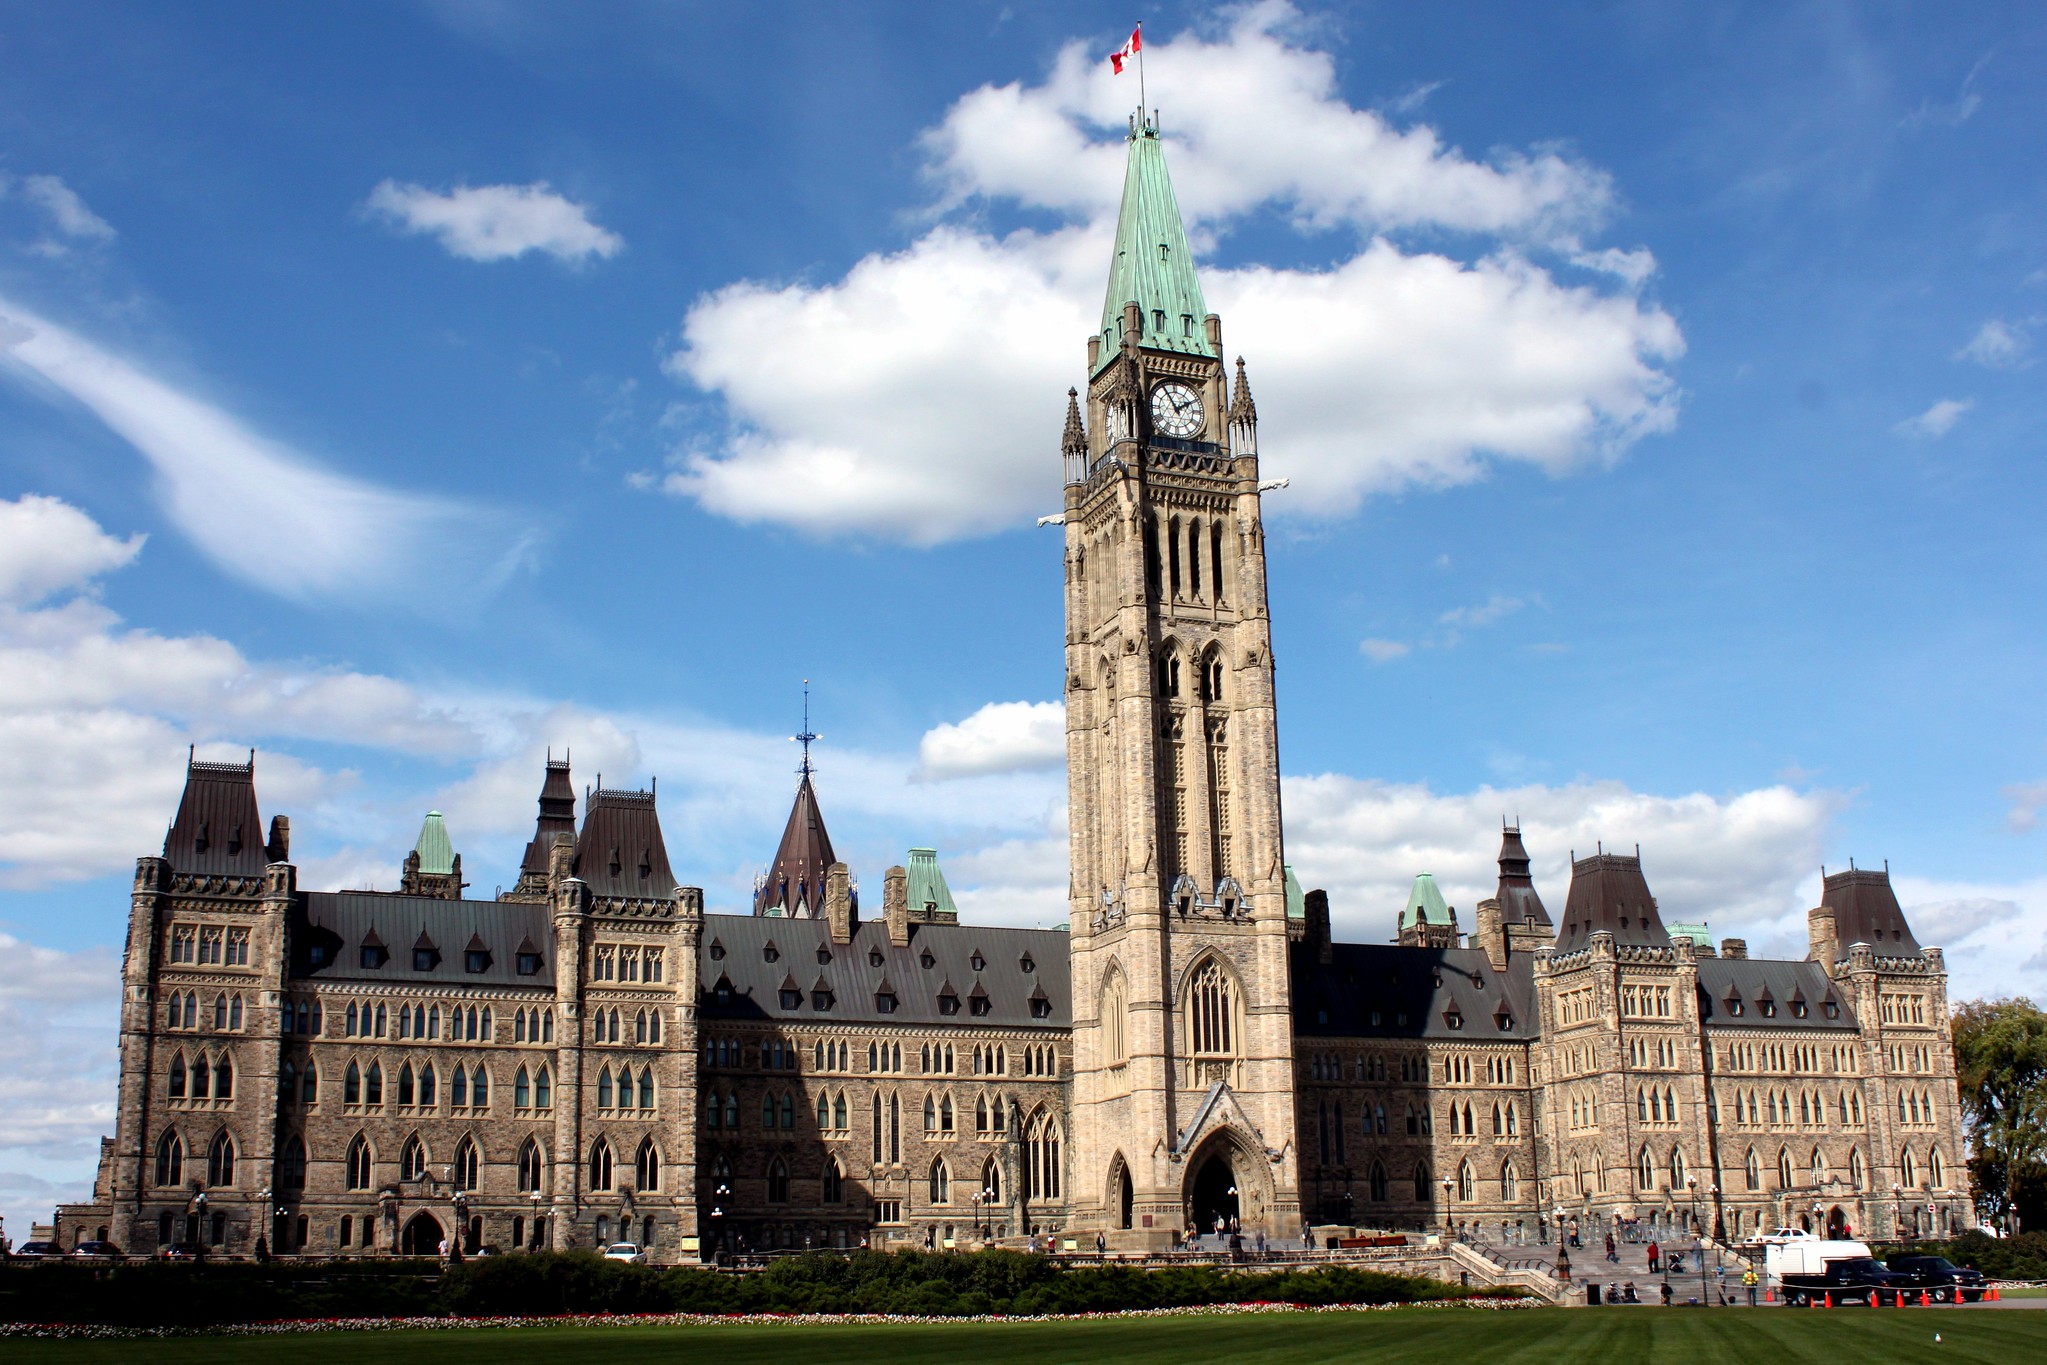 Canada's parliament building